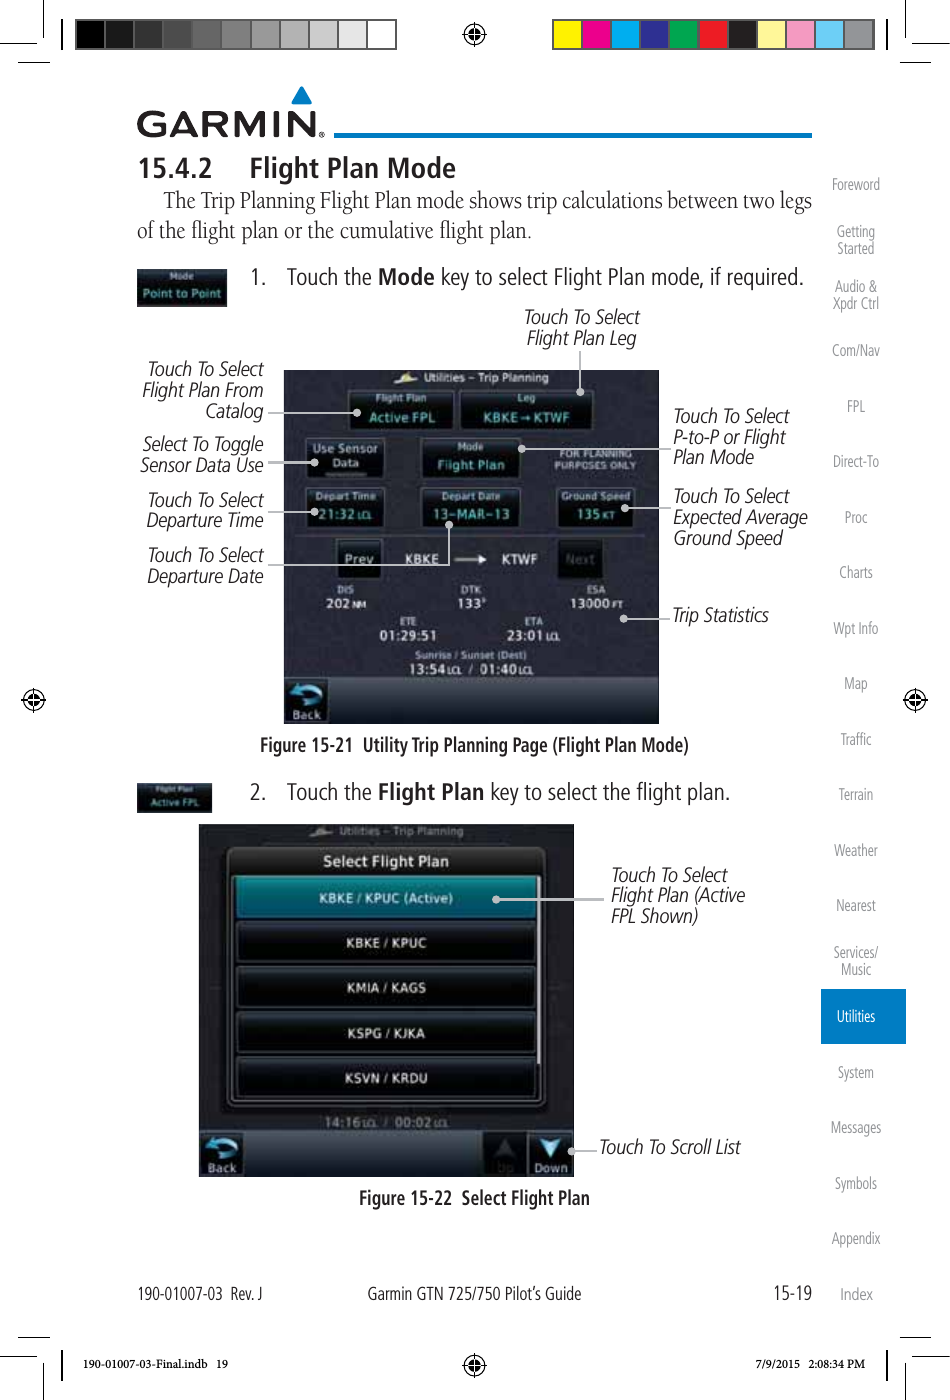 15-19190-01007-03  Rev. JGarmin GTN 725/750 Pilot’s GuideForewordGetting StartedAudio &amp;  Xpdr CtrlCom/NavFPLDirect-ToProcChartsWpt InfoMapTrafﬁcTerrainWeatherNearestServices/MusicUtilitiesSystemMessagesSymbolsAppendixIndex15.4.2  Flight Plan ModeThe Trip Planning Flight Plan mode shows trip calculations between two legs of the ﬂight plan or the cumulative ﬂight plan.  1. Touch the Mode key to select Flight Plan mode, if required. Touch To Select P-to-P or Flight Plan ModeTouch To Select Flight Plan From CatalogTouch To Select Expected Average Ground SpeedTouch To Select Departure TimeTouch To Select Departure DateTouch To Select Flight Plan LegTrip StatisticsSelect To Toggle Sensor Data UseFigure 15-21  Utility Trip Planning Page (Flight Plan Mode) 2. Touch the Flight Plan key to select the ﬂight plan. Touch To Scroll ListTouch To Select Flight Plan (Active FPL Shown)Figure 15-22  Select Flight Plan190-01007-03-Final.indb   19 7/9/2015   2:08:34 PM